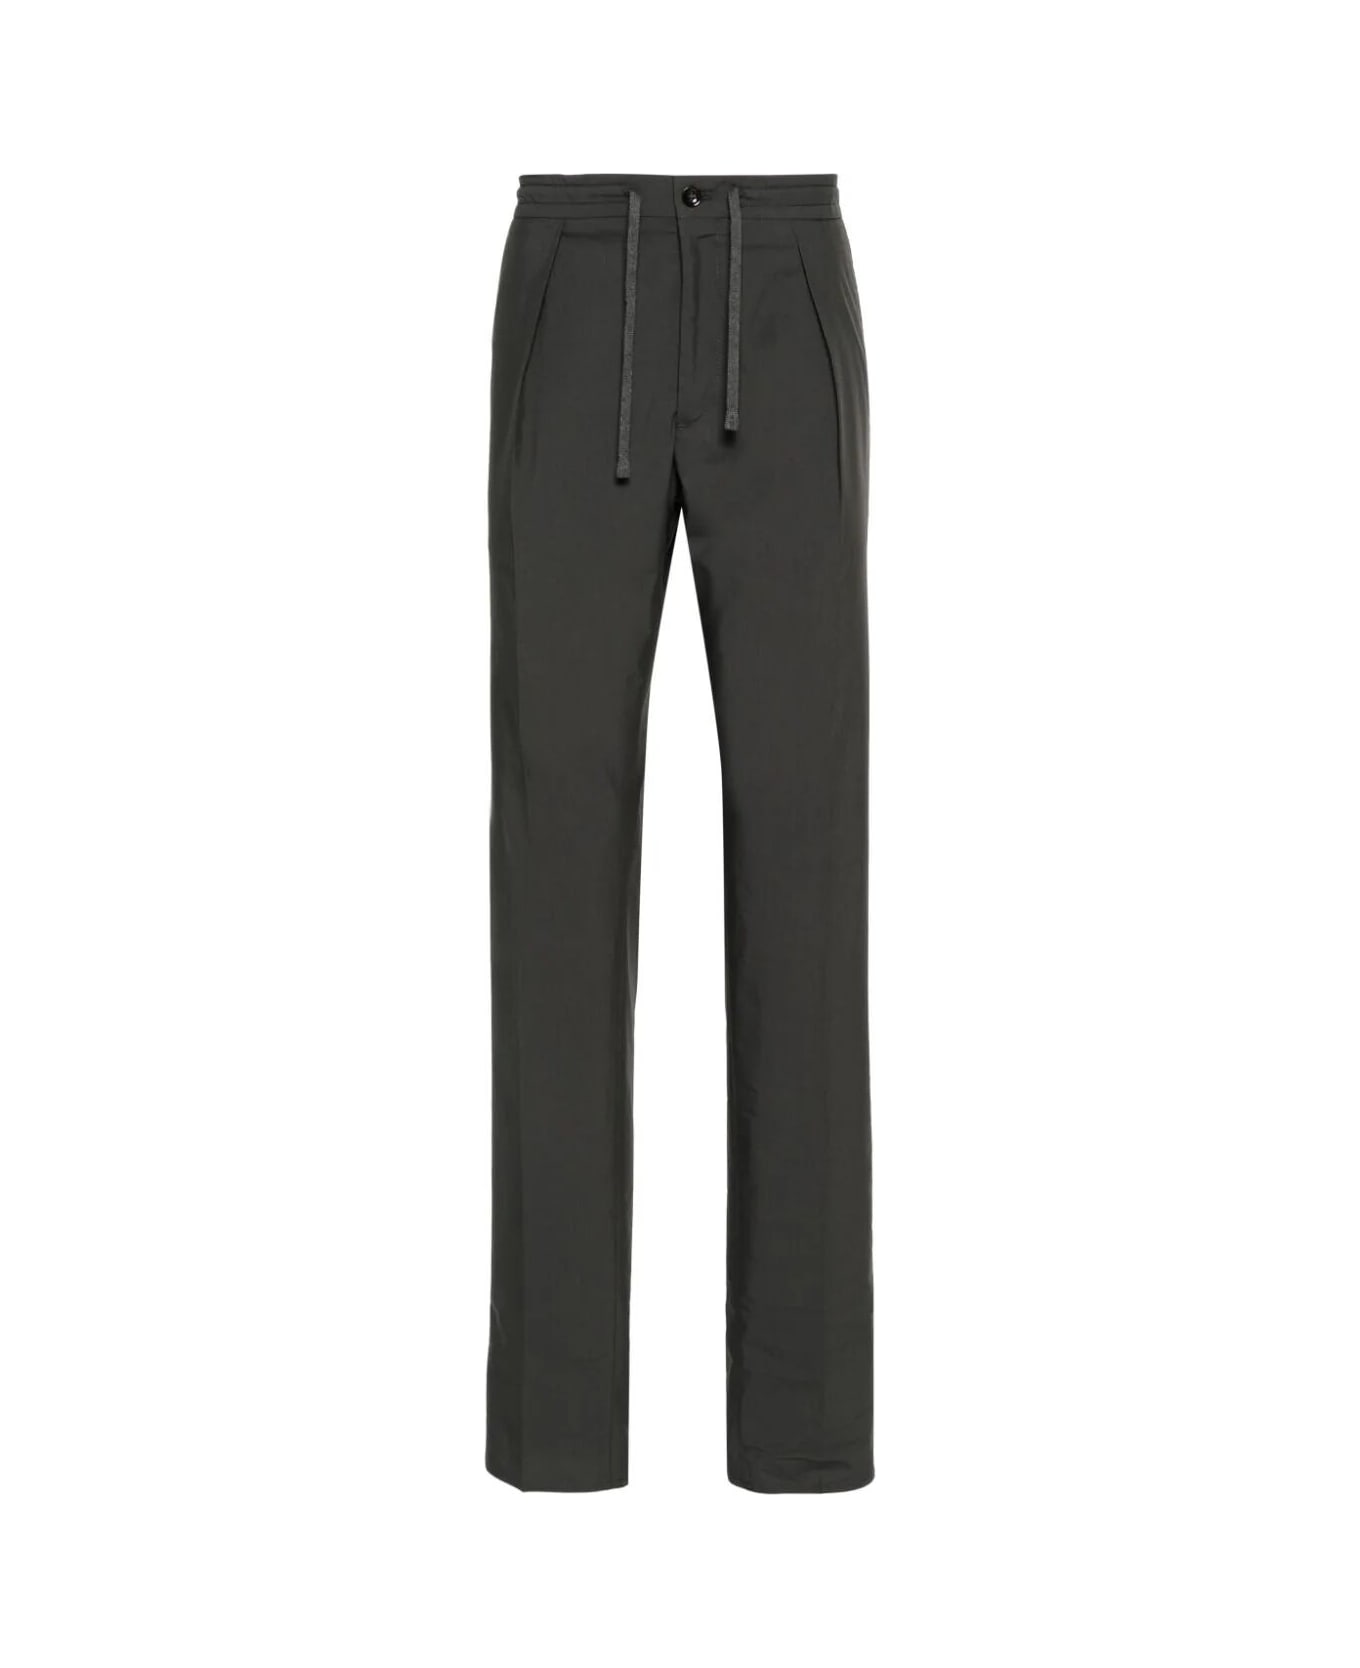 Incotex Model A44 Regular Fit Trousers - Dark Grey ボトムス